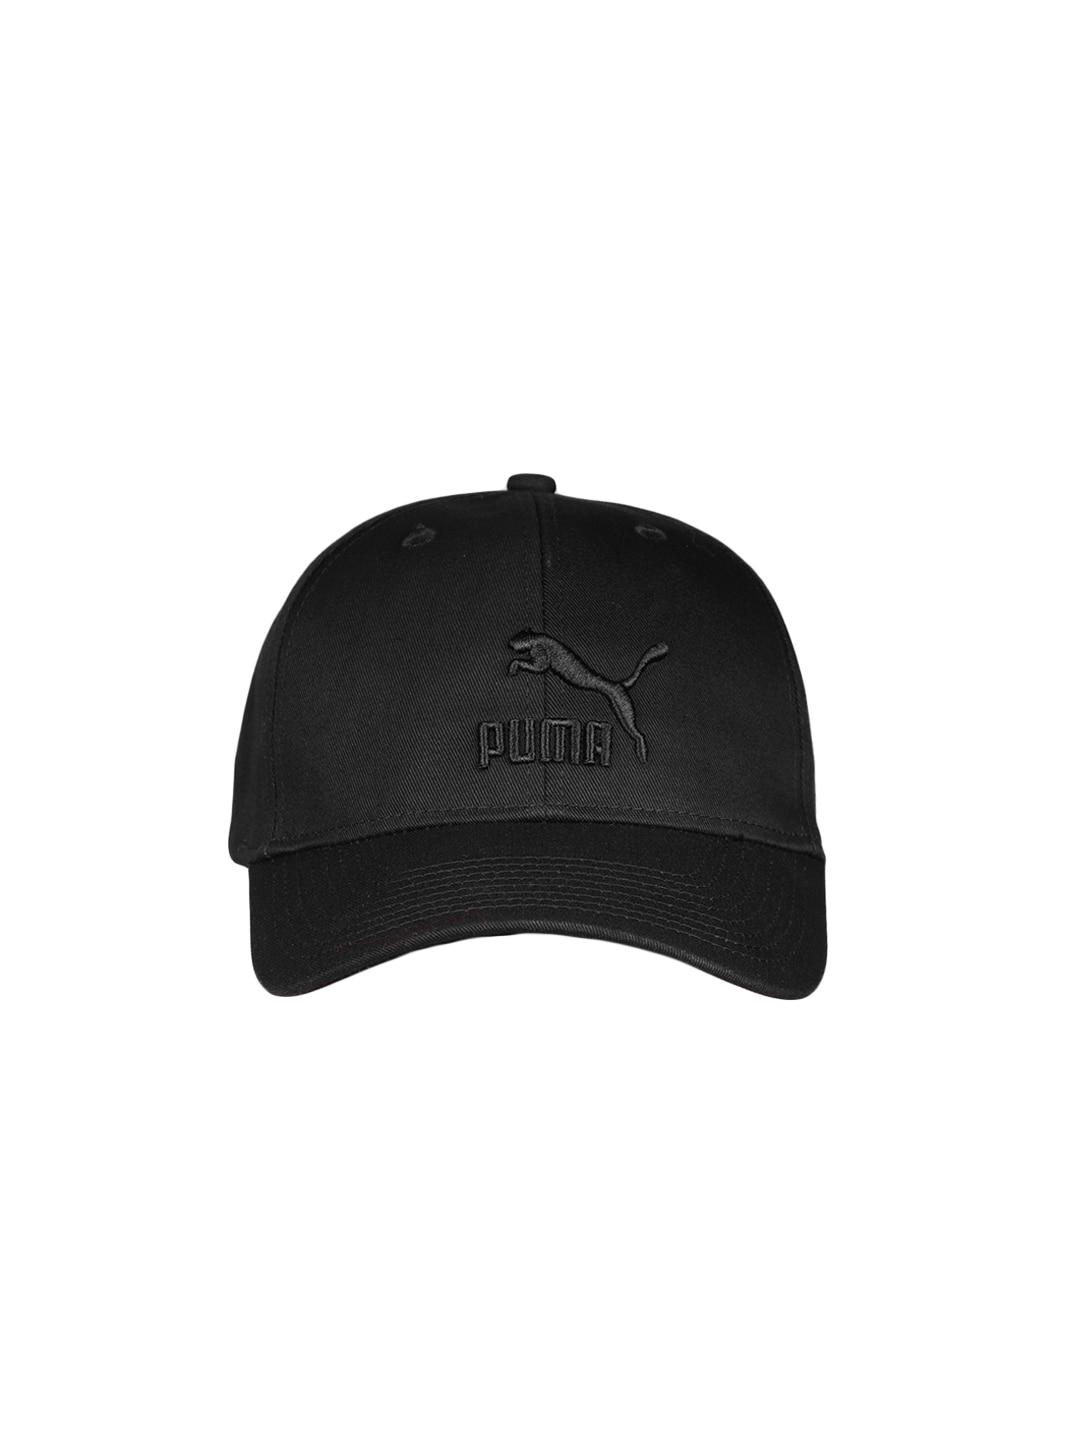 Puma Unisex Black Archive Logo Pure Cotton Baseball Cap Price in India